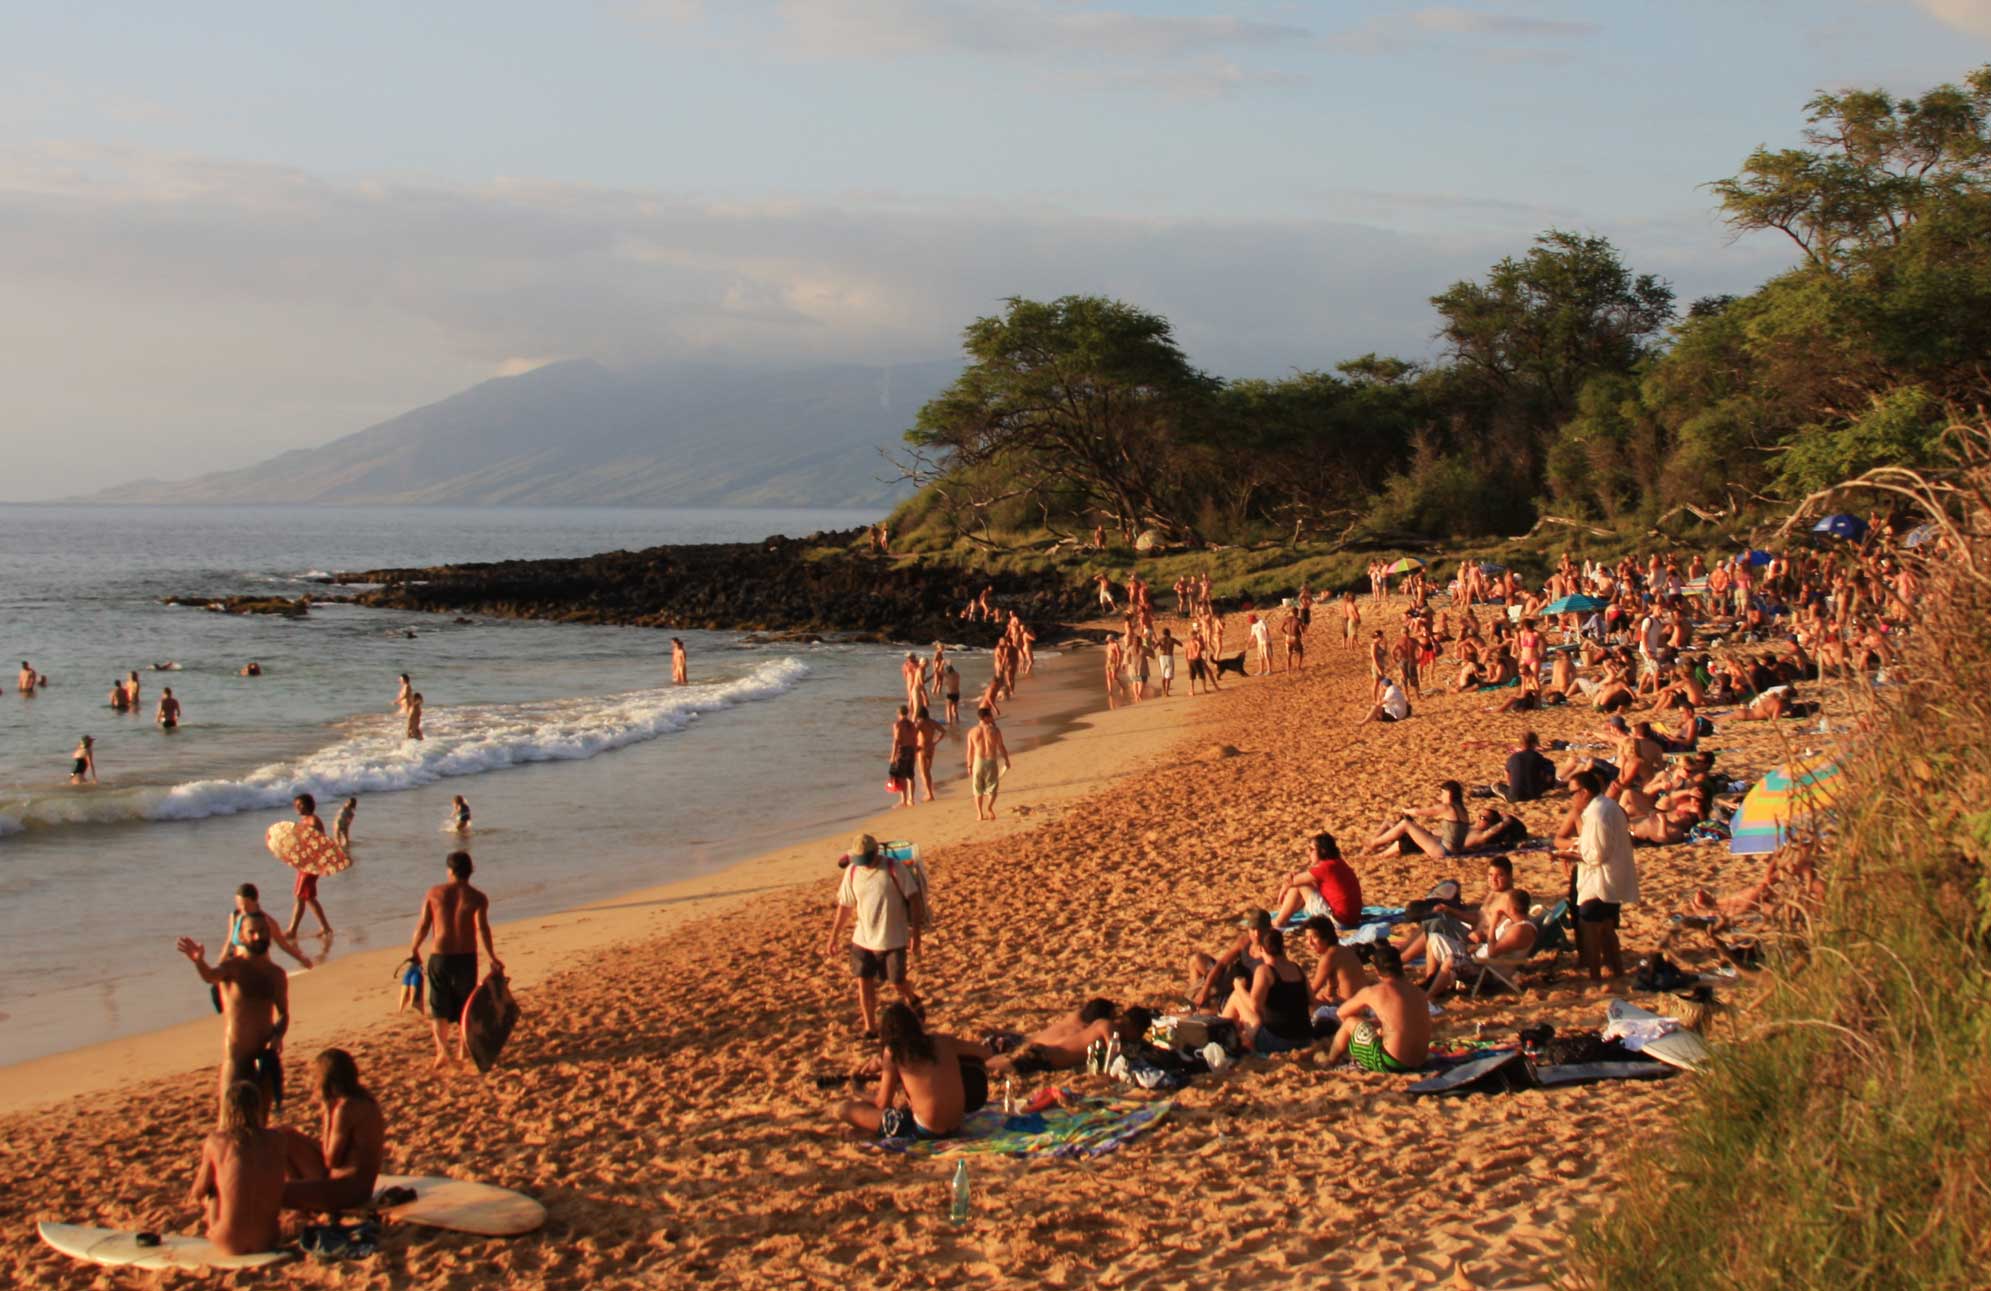 Little Beach Maui Pics in heat